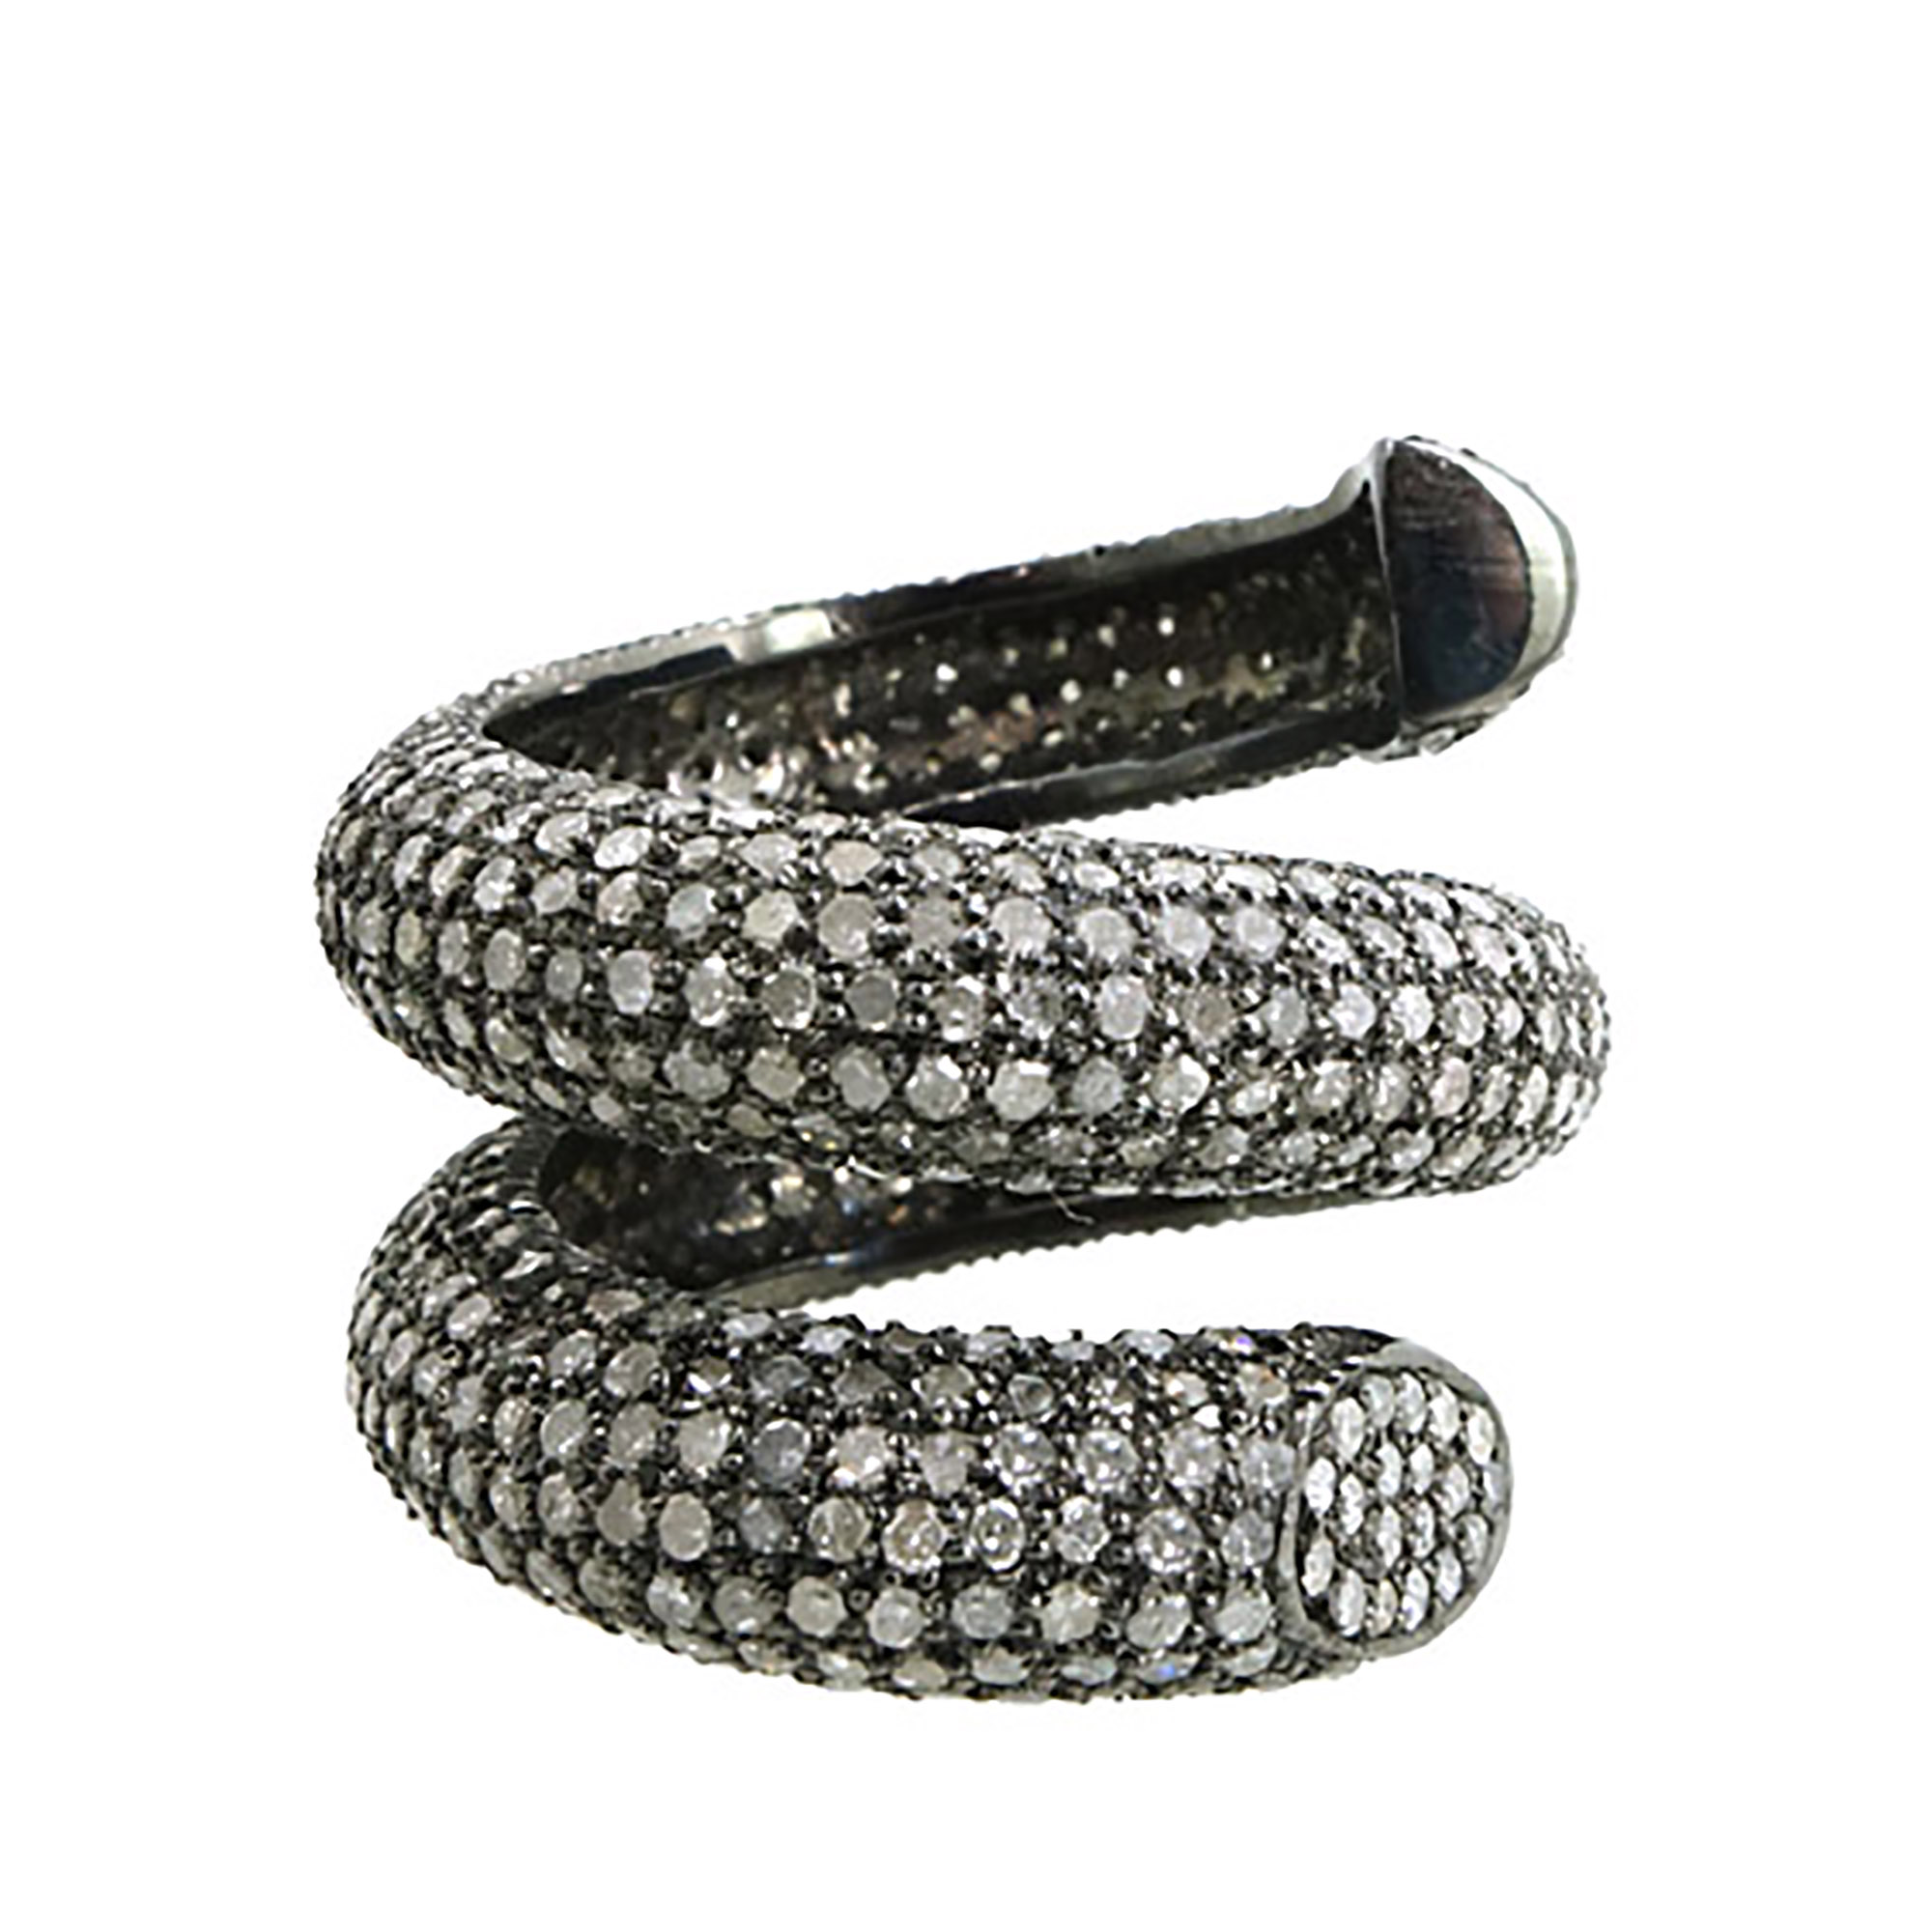 Diamond vintage snake spiral ring 925 silver jewelry